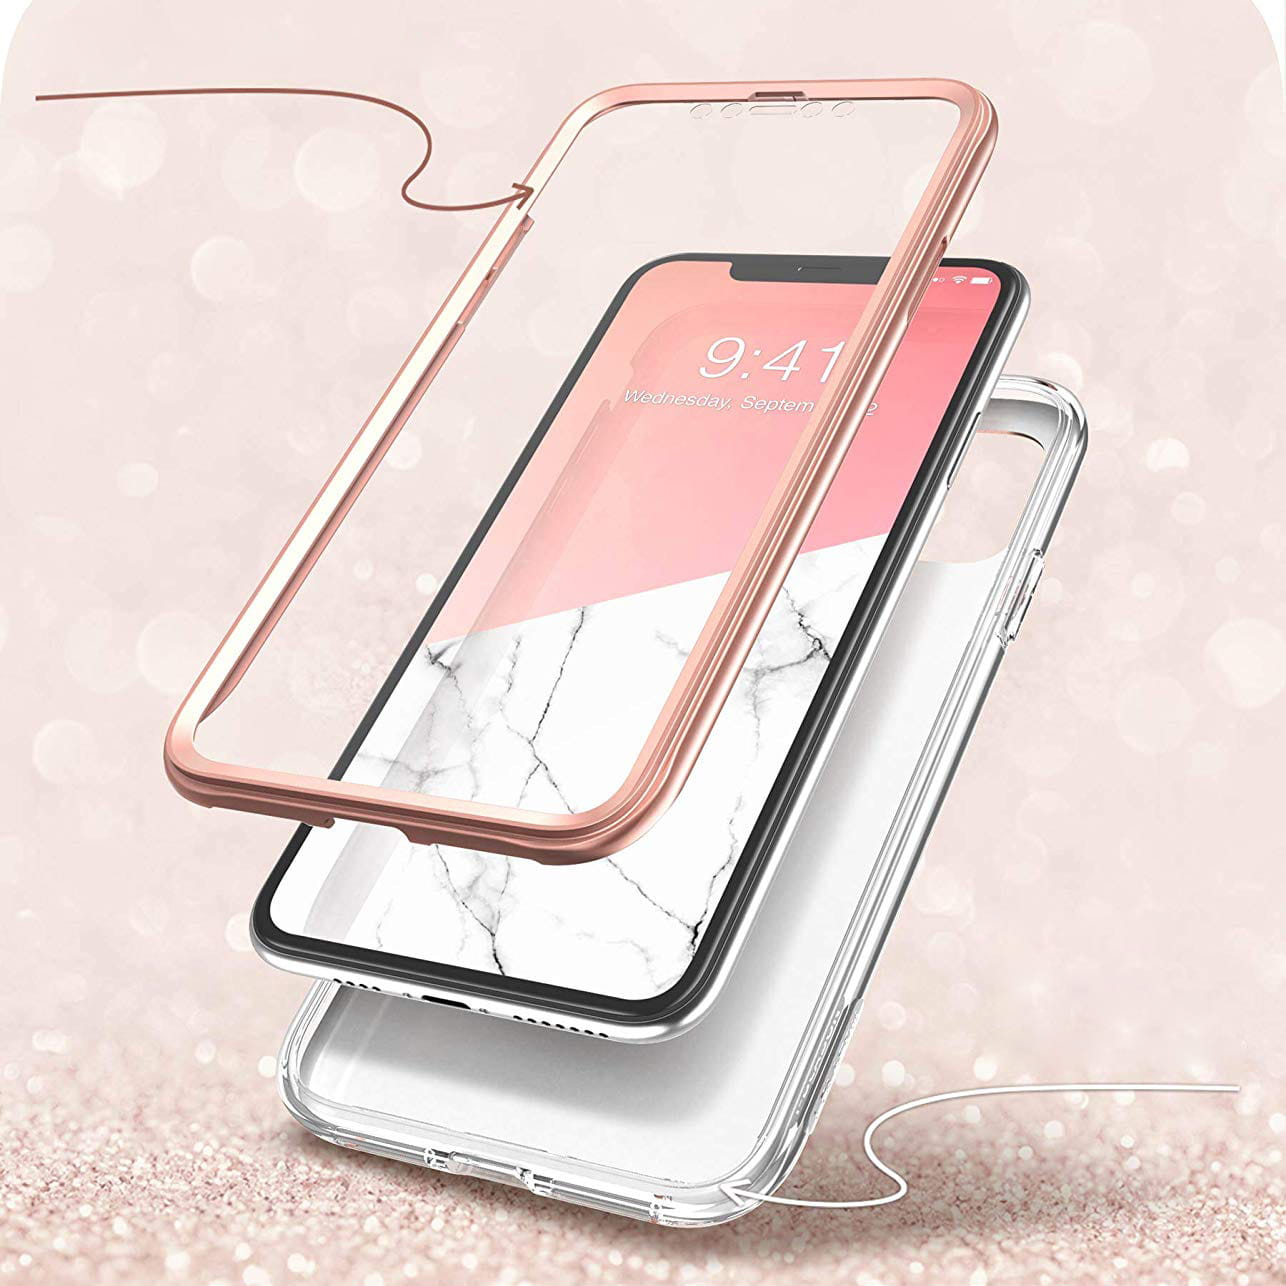 Schutzhülle Supcase i-Blason Cosmo SP für iPhone 11 rosa